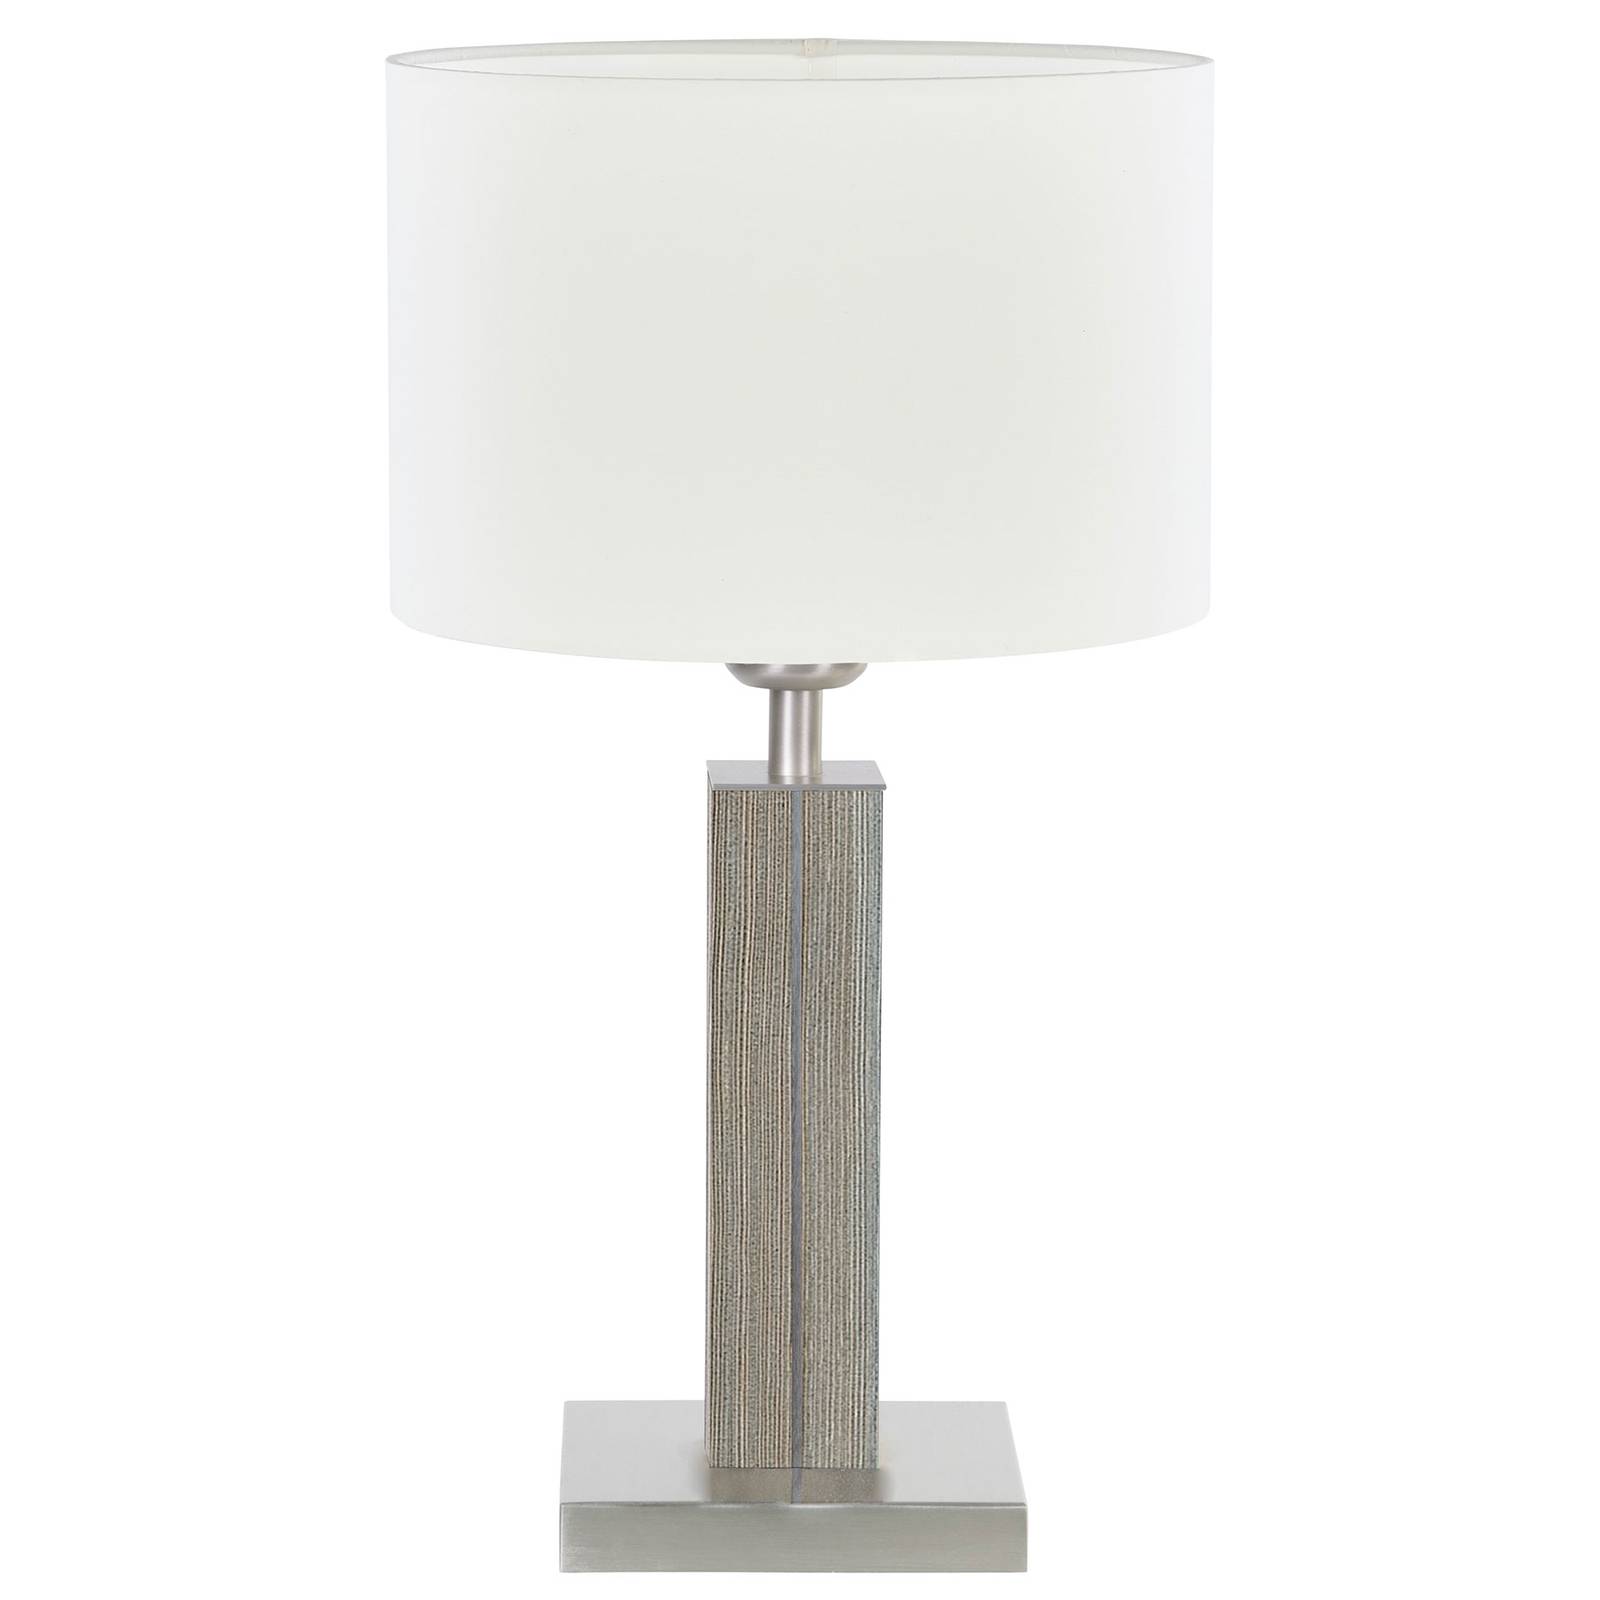 HerzBlut Dana lampe à poser épicéa, blanche, 45 cm